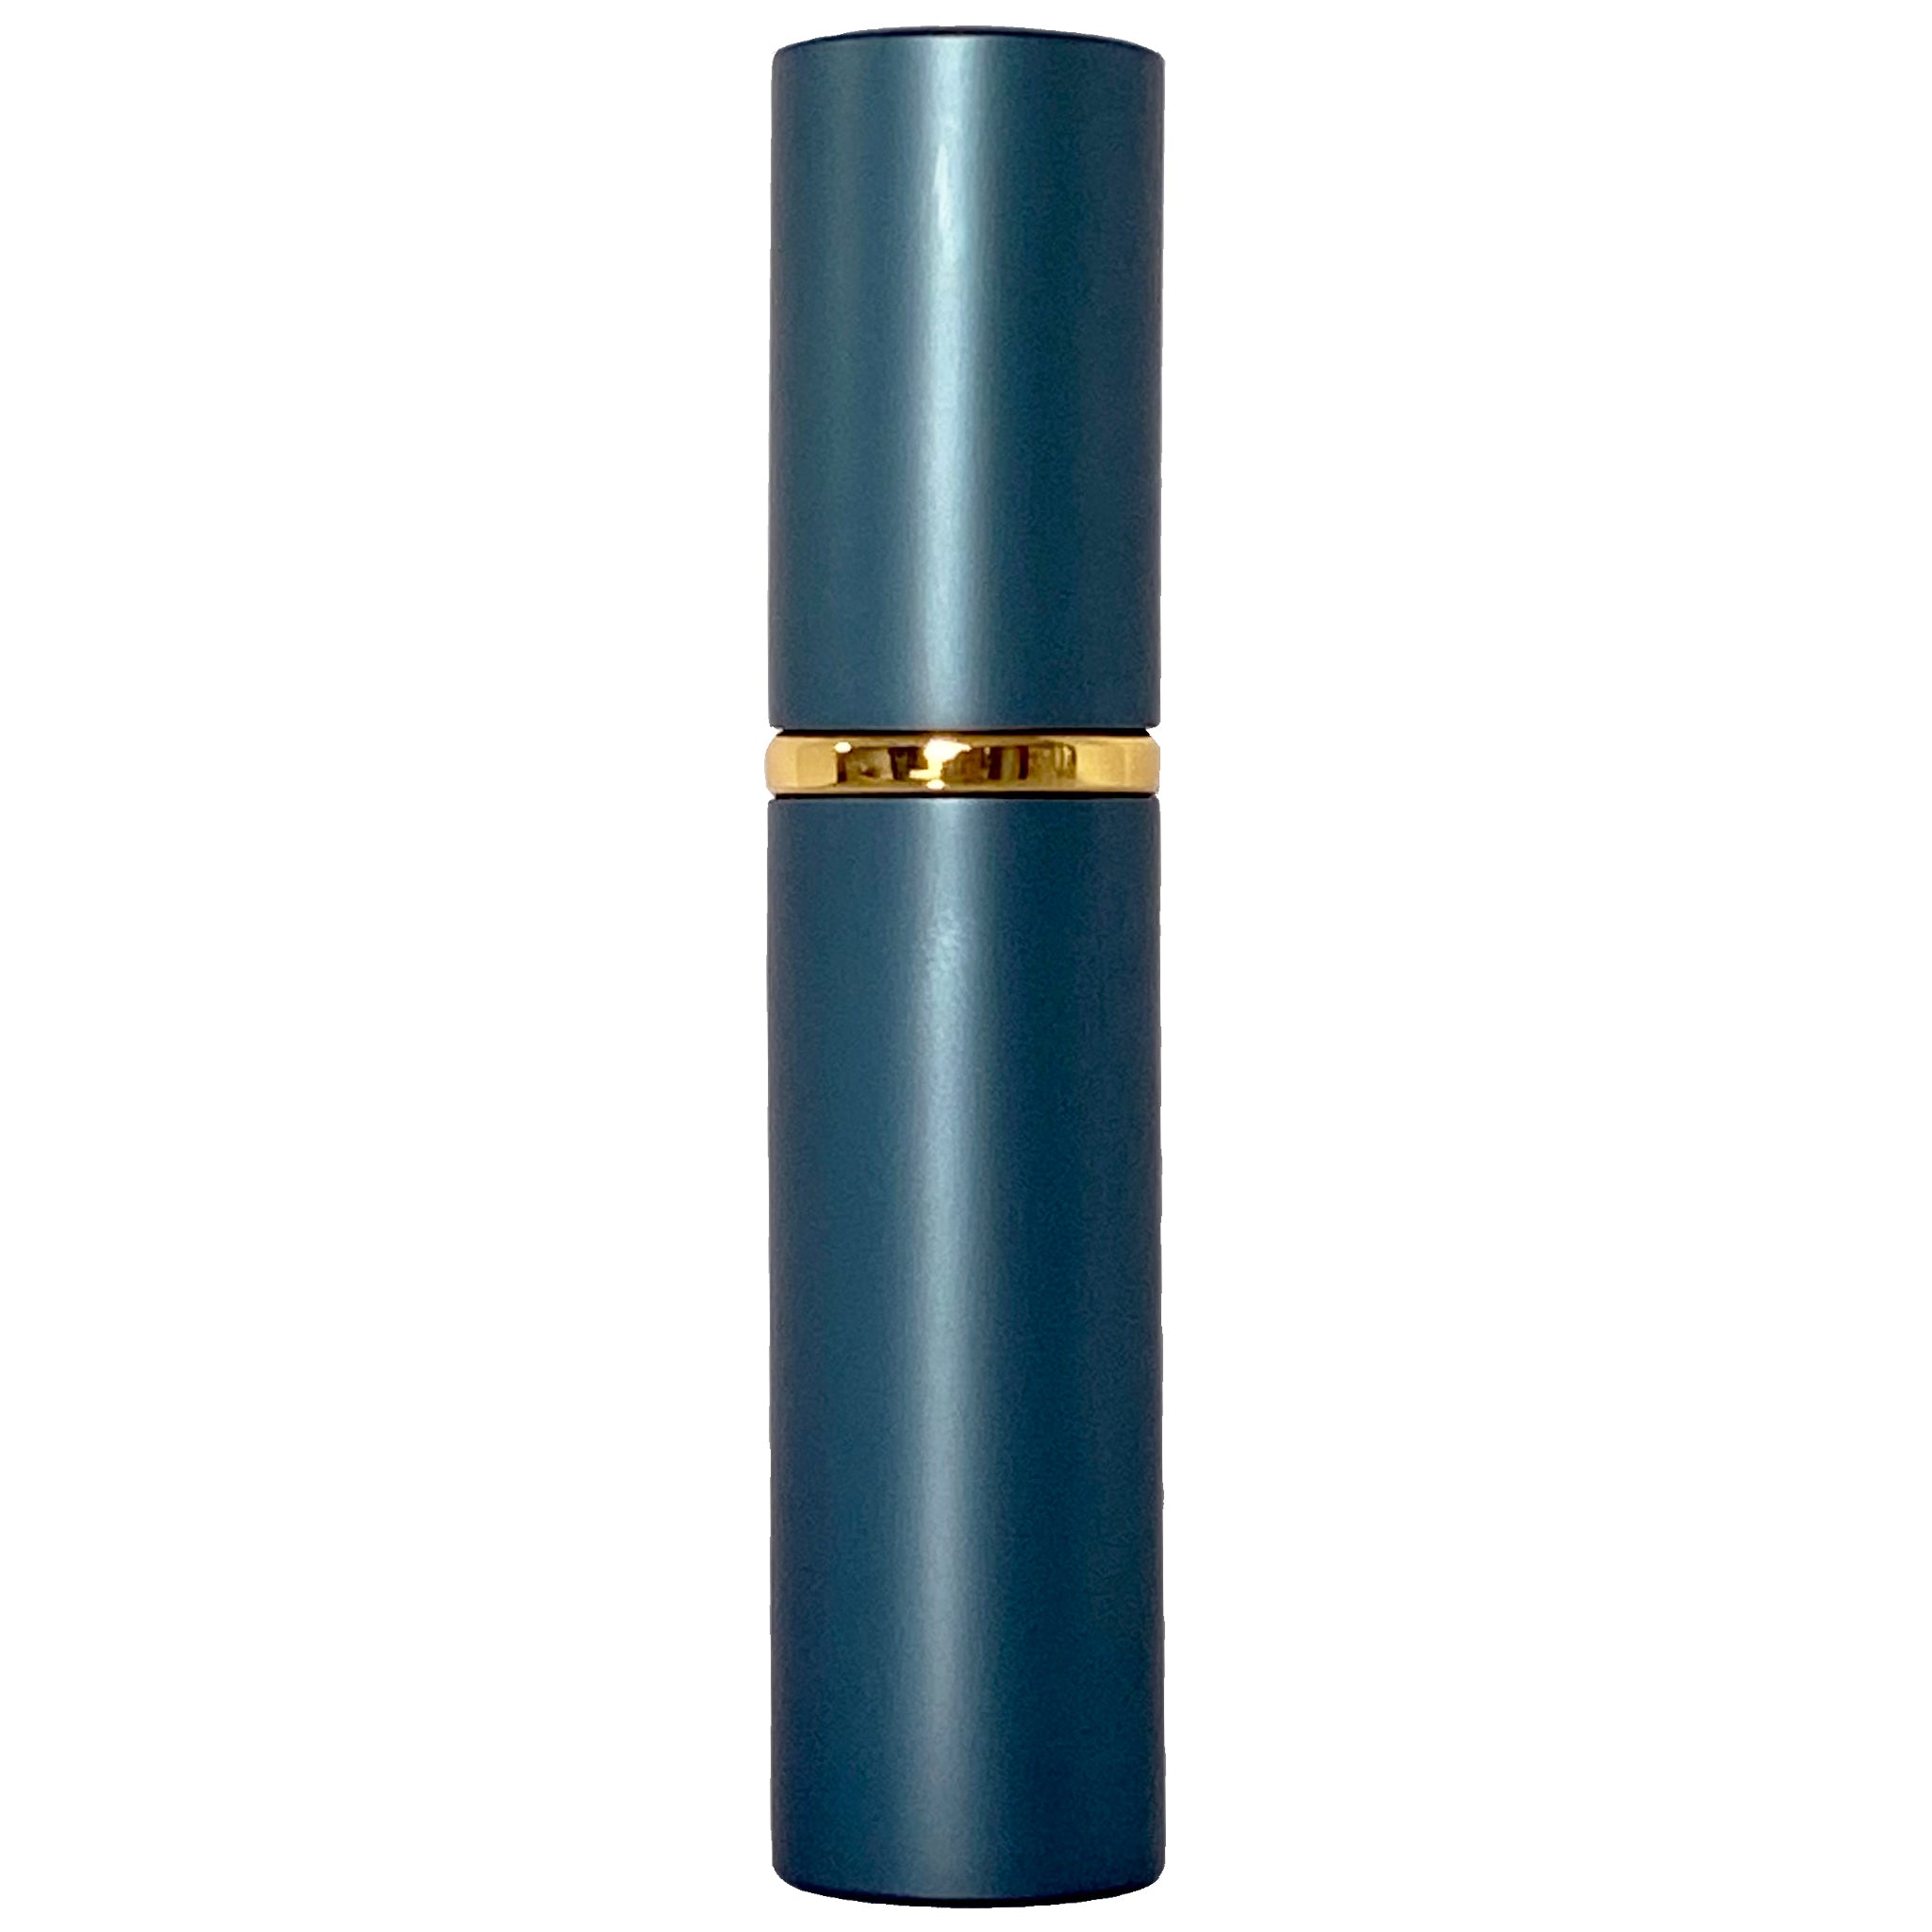 6ml 0.2oz Blue Perfume Glass Spray Deluxe Bottles Gold Atomizers